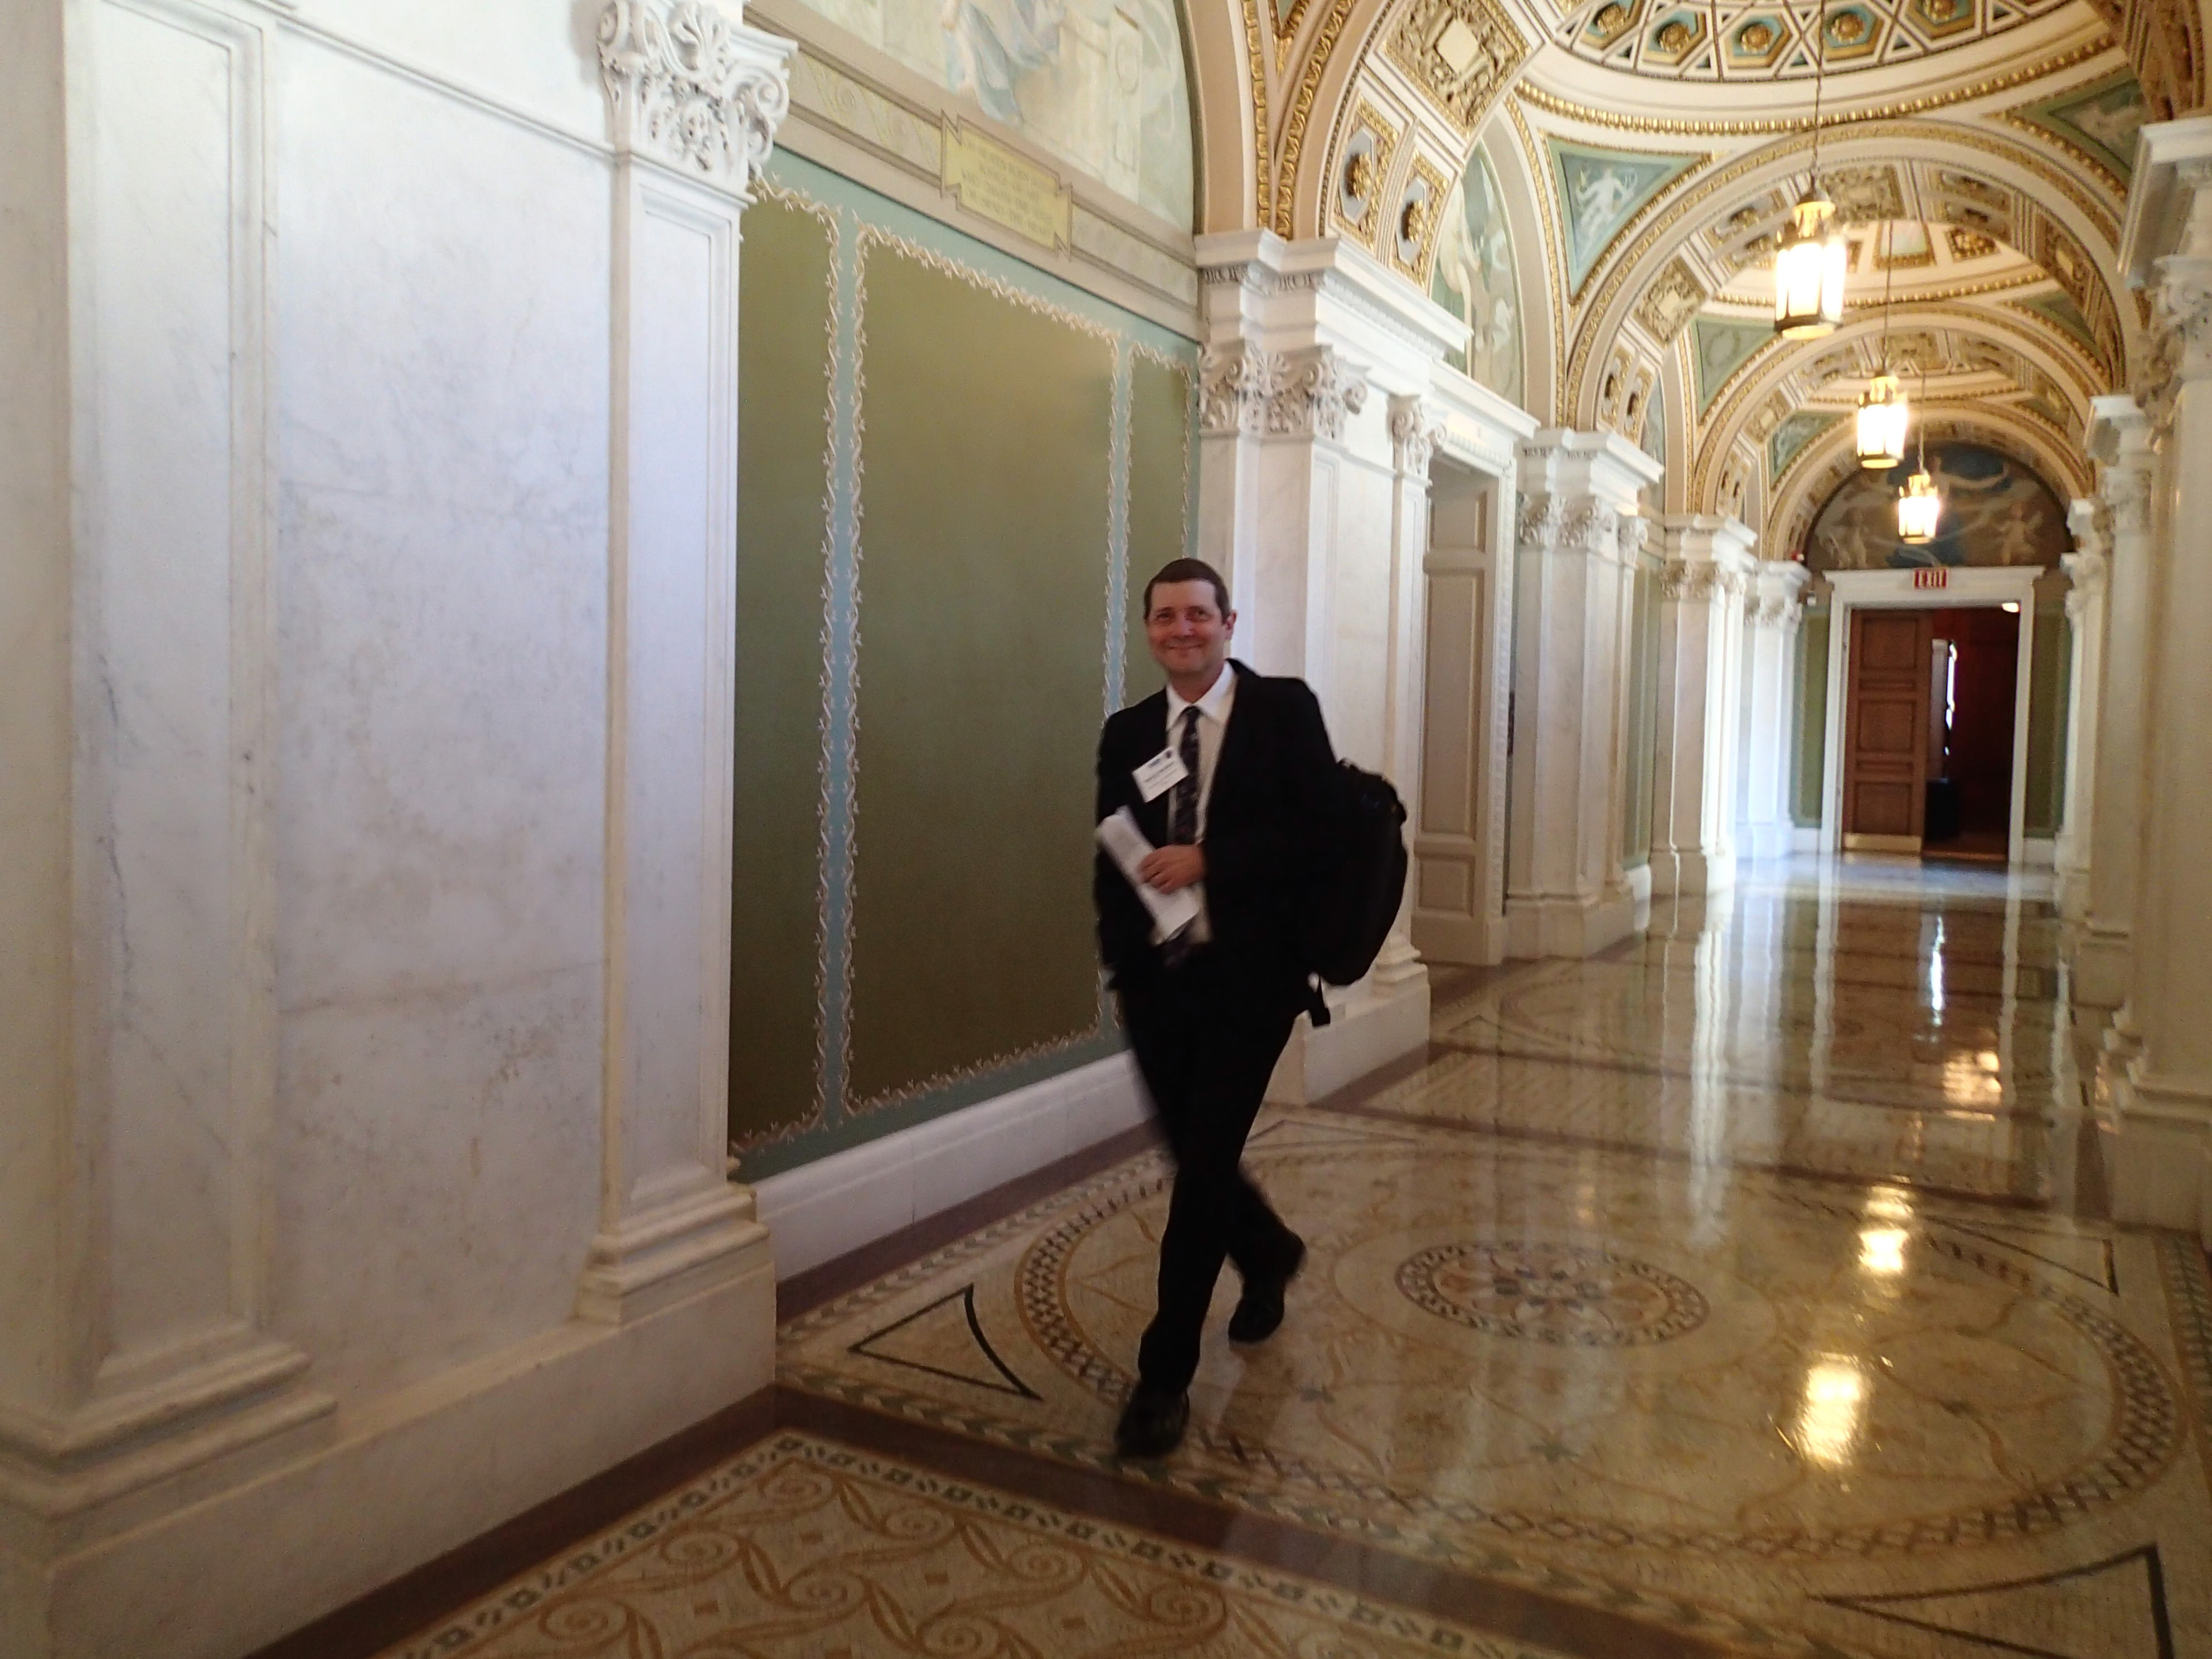 Randy Wadkins, BPS's 2016-17 Congressional Fellow, in the Halls of Congress.